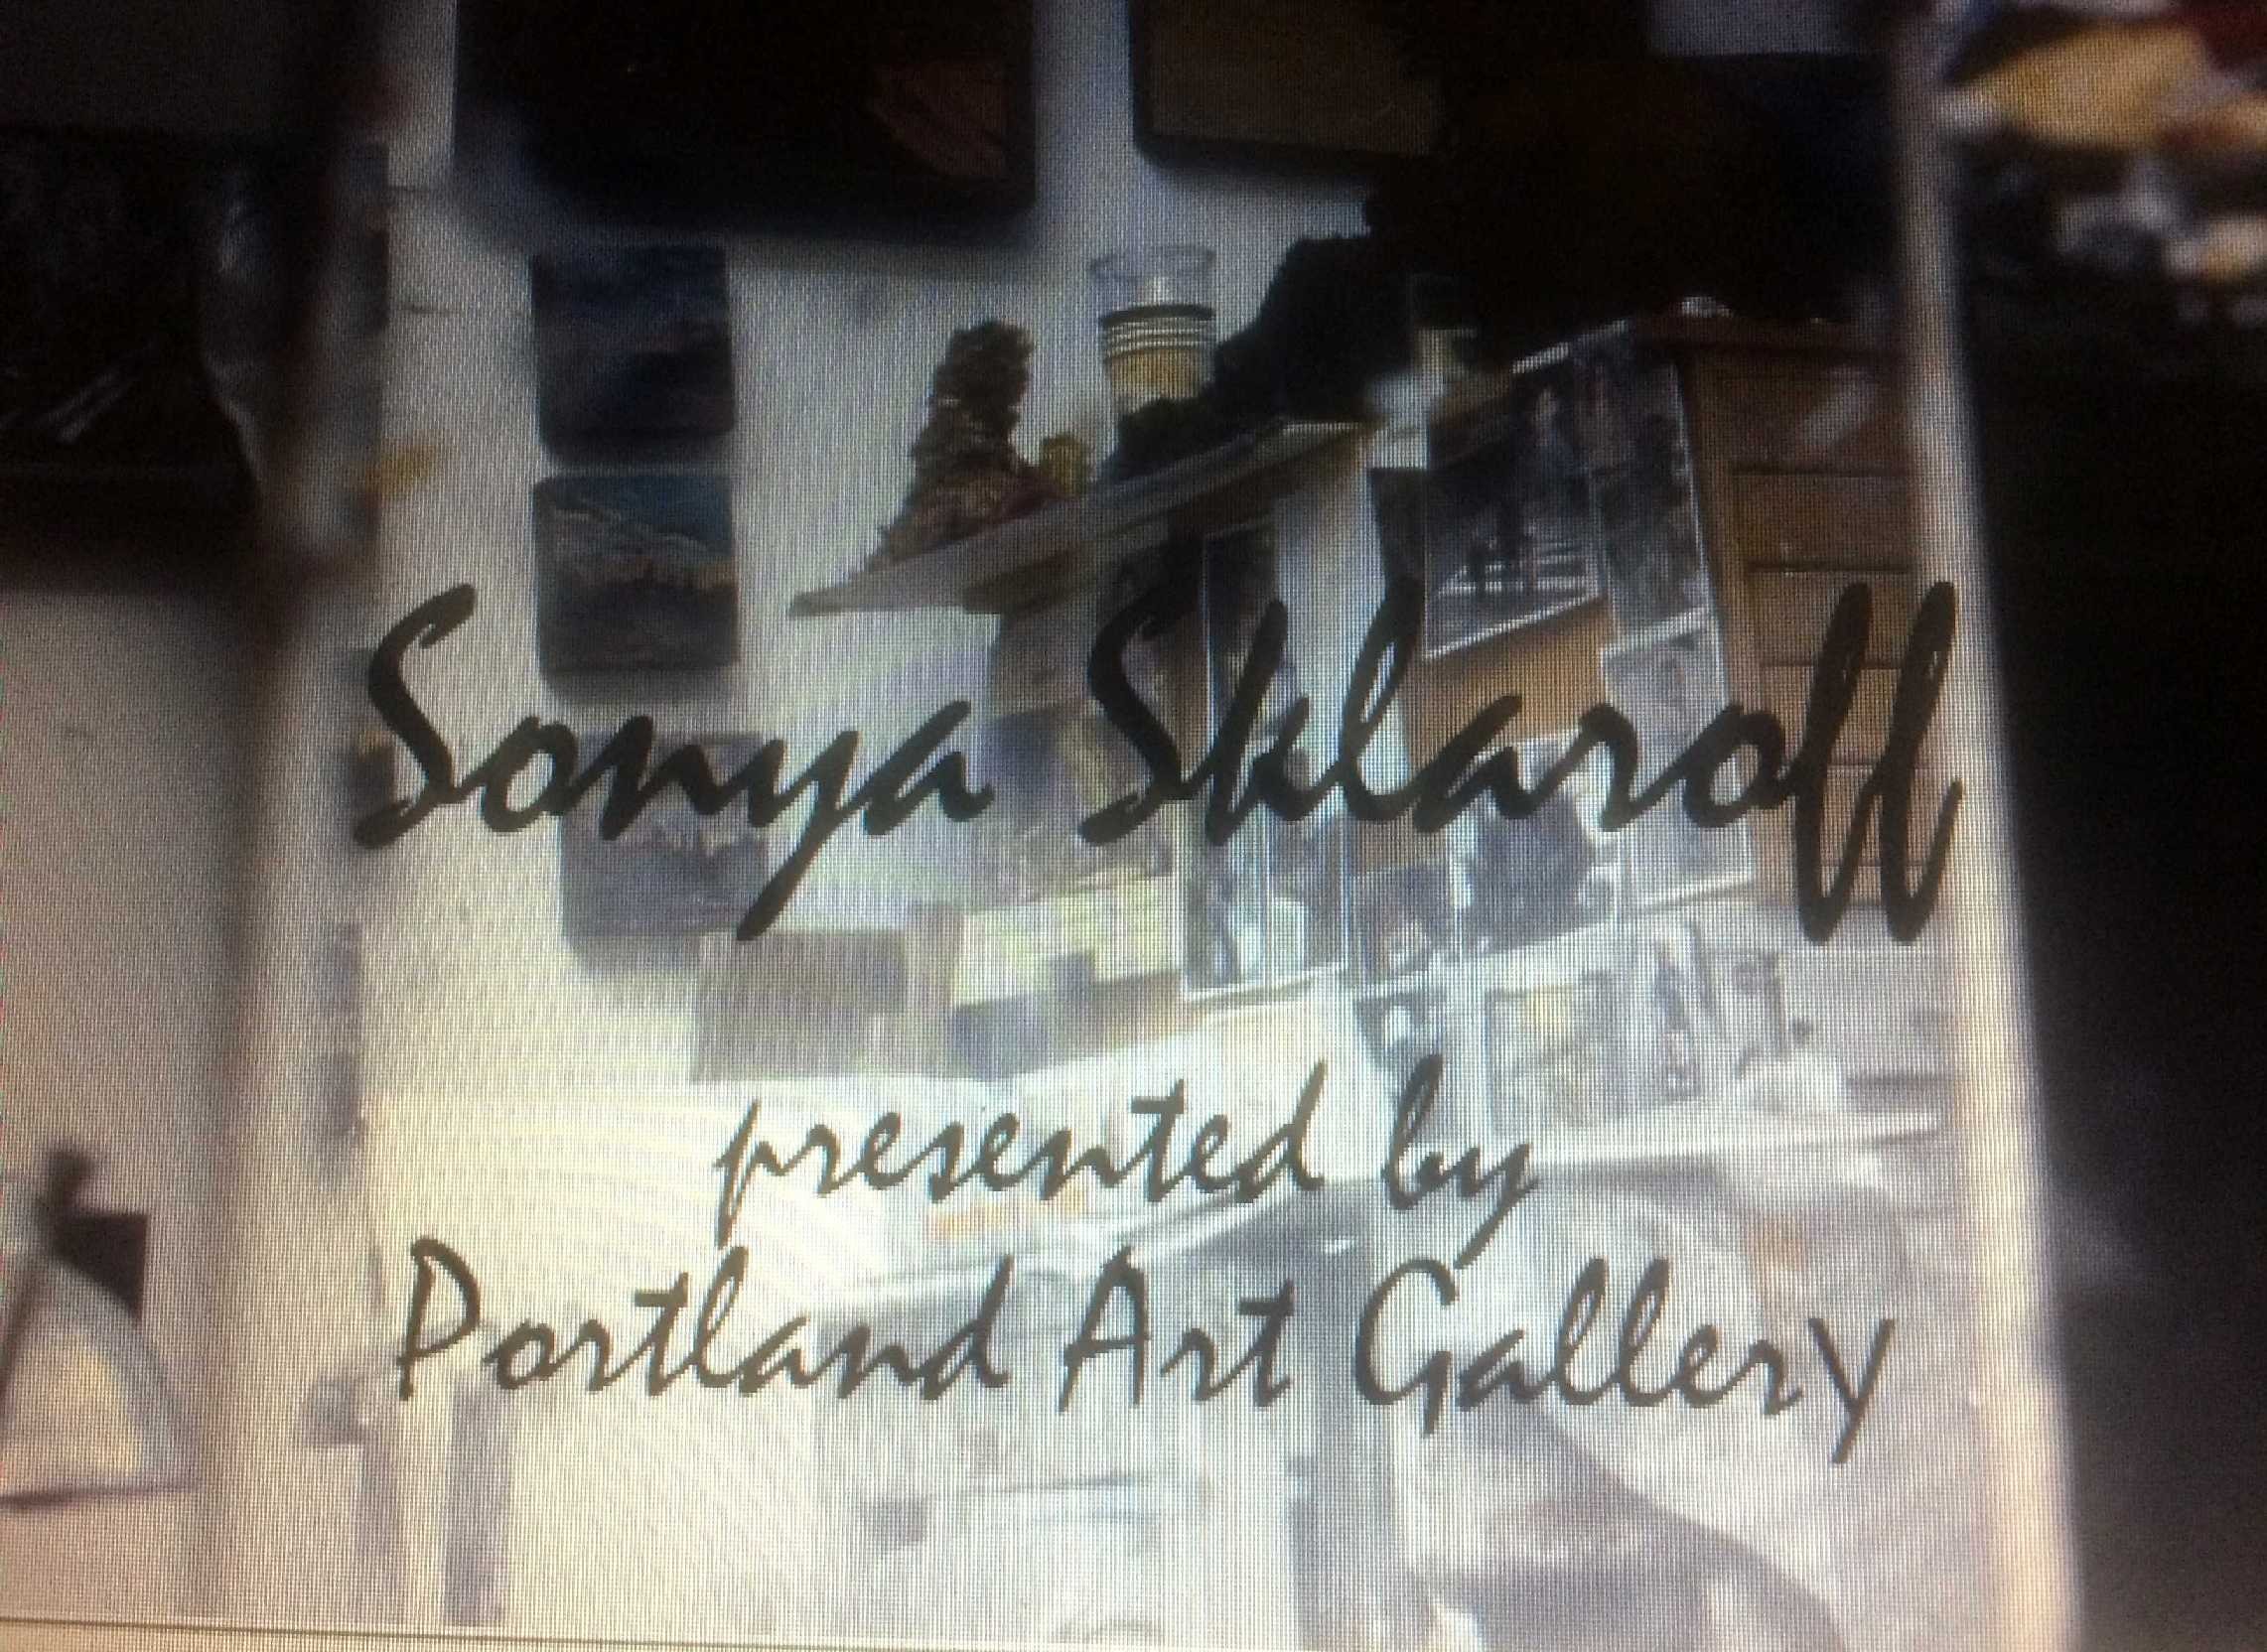 SKLAROFF interviewed by Portland Art Gallery